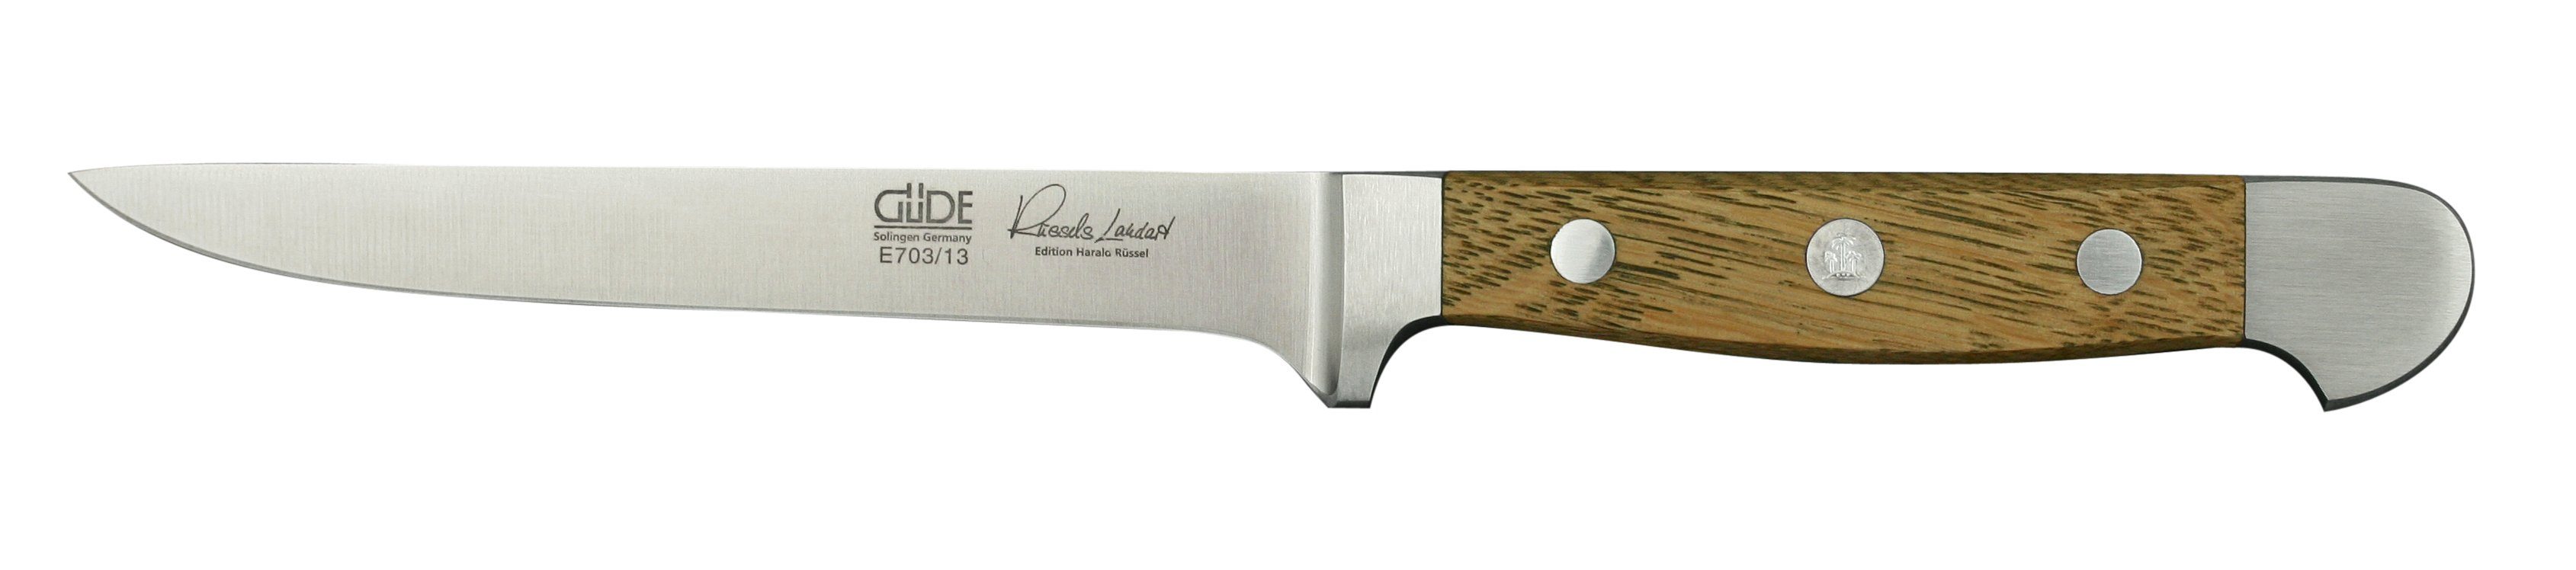 Güde Messer Solingen Schale Alpha Fasseiche, Messerstahl, Ausbeinmesser 13 cm flexibel - CVM-Messerstahl - Griffschalen